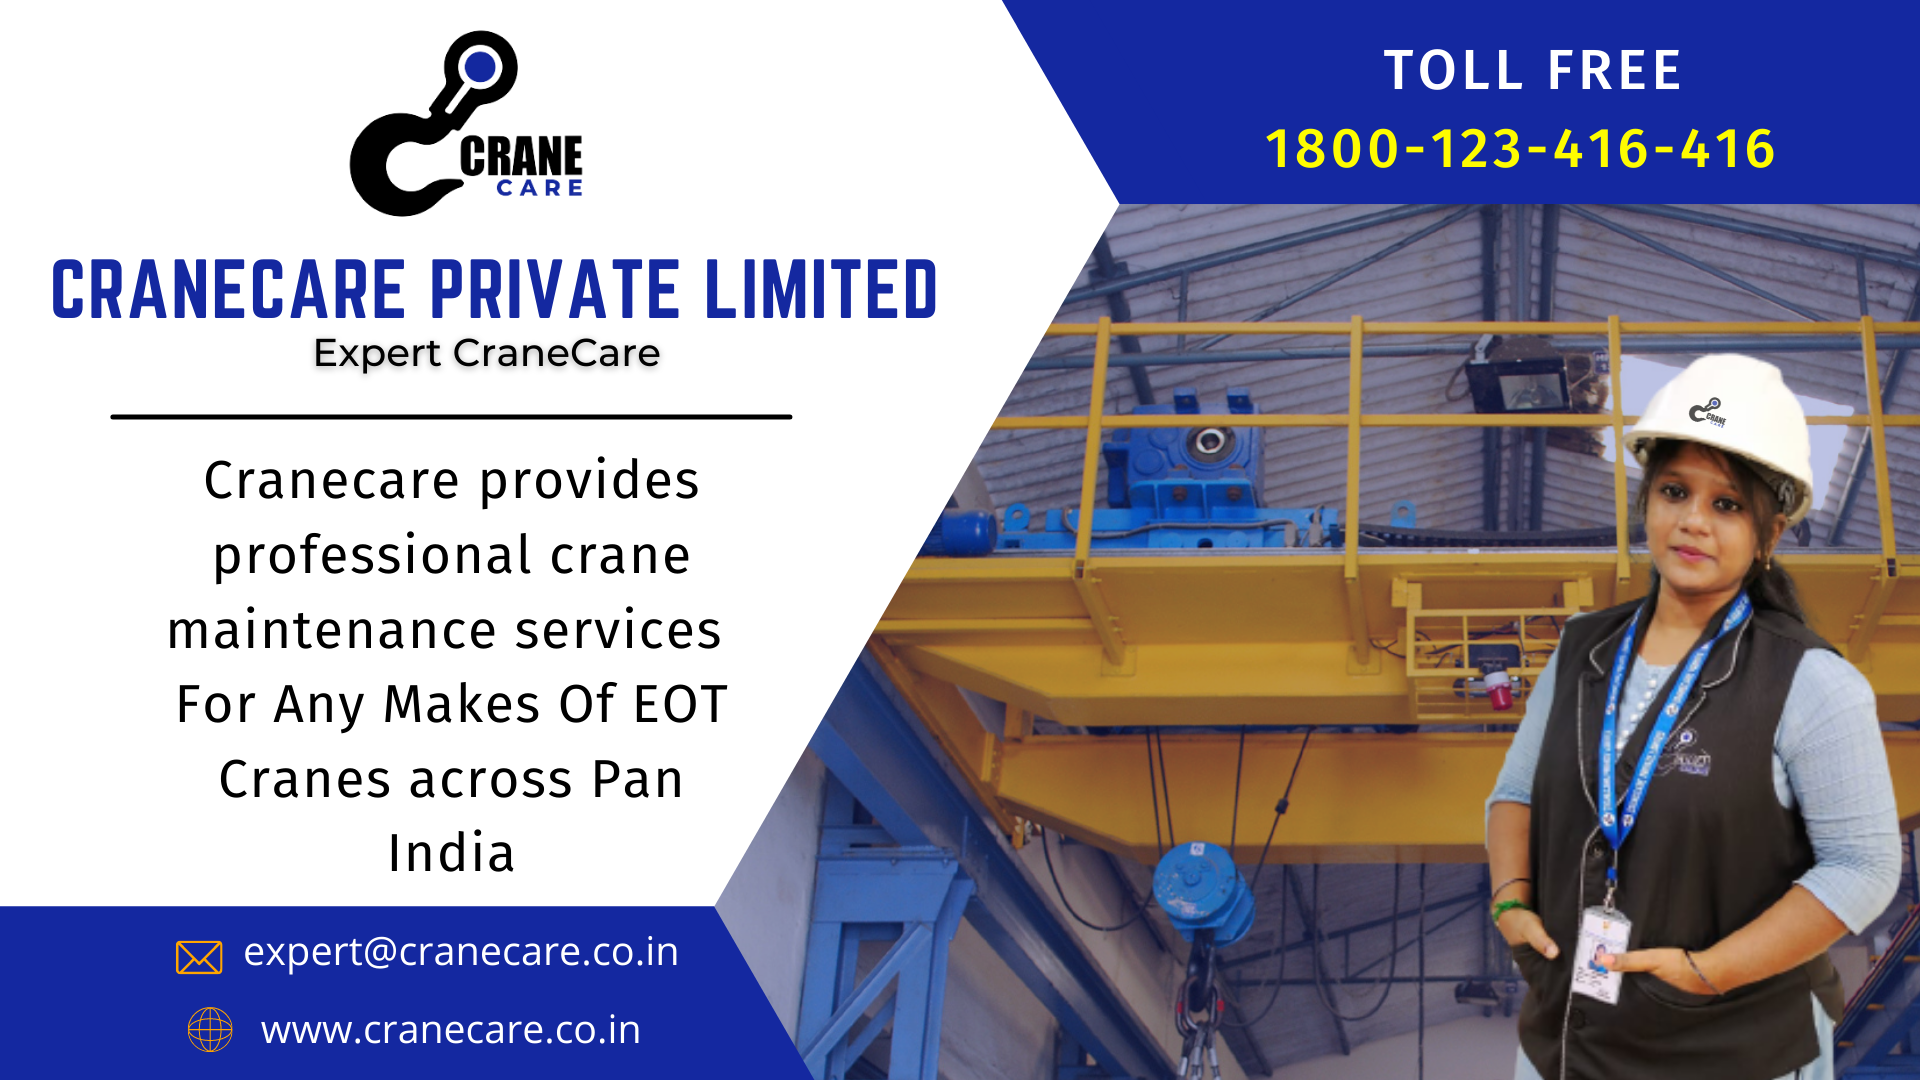 CraneCare Provides Professional Crane